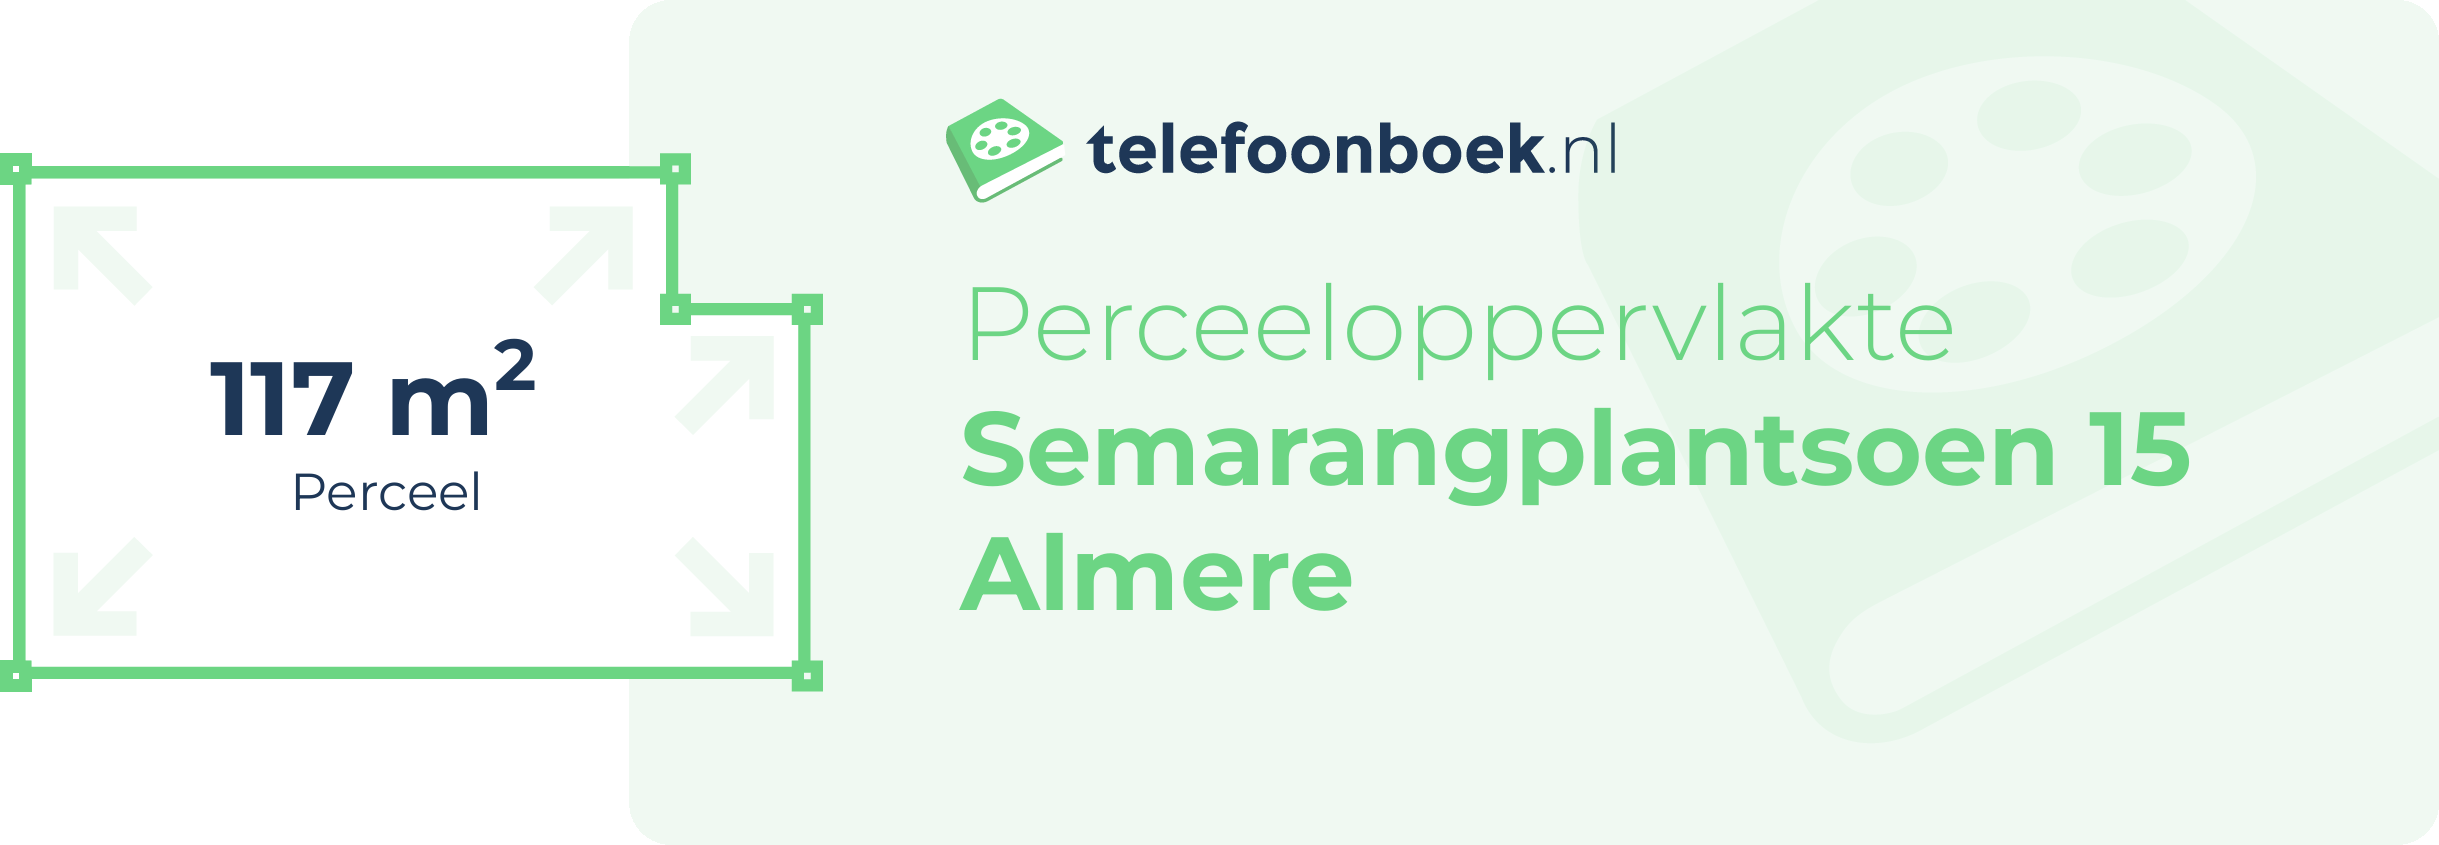 Perceeloppervlakte Semarangplantsoen 15 Almere